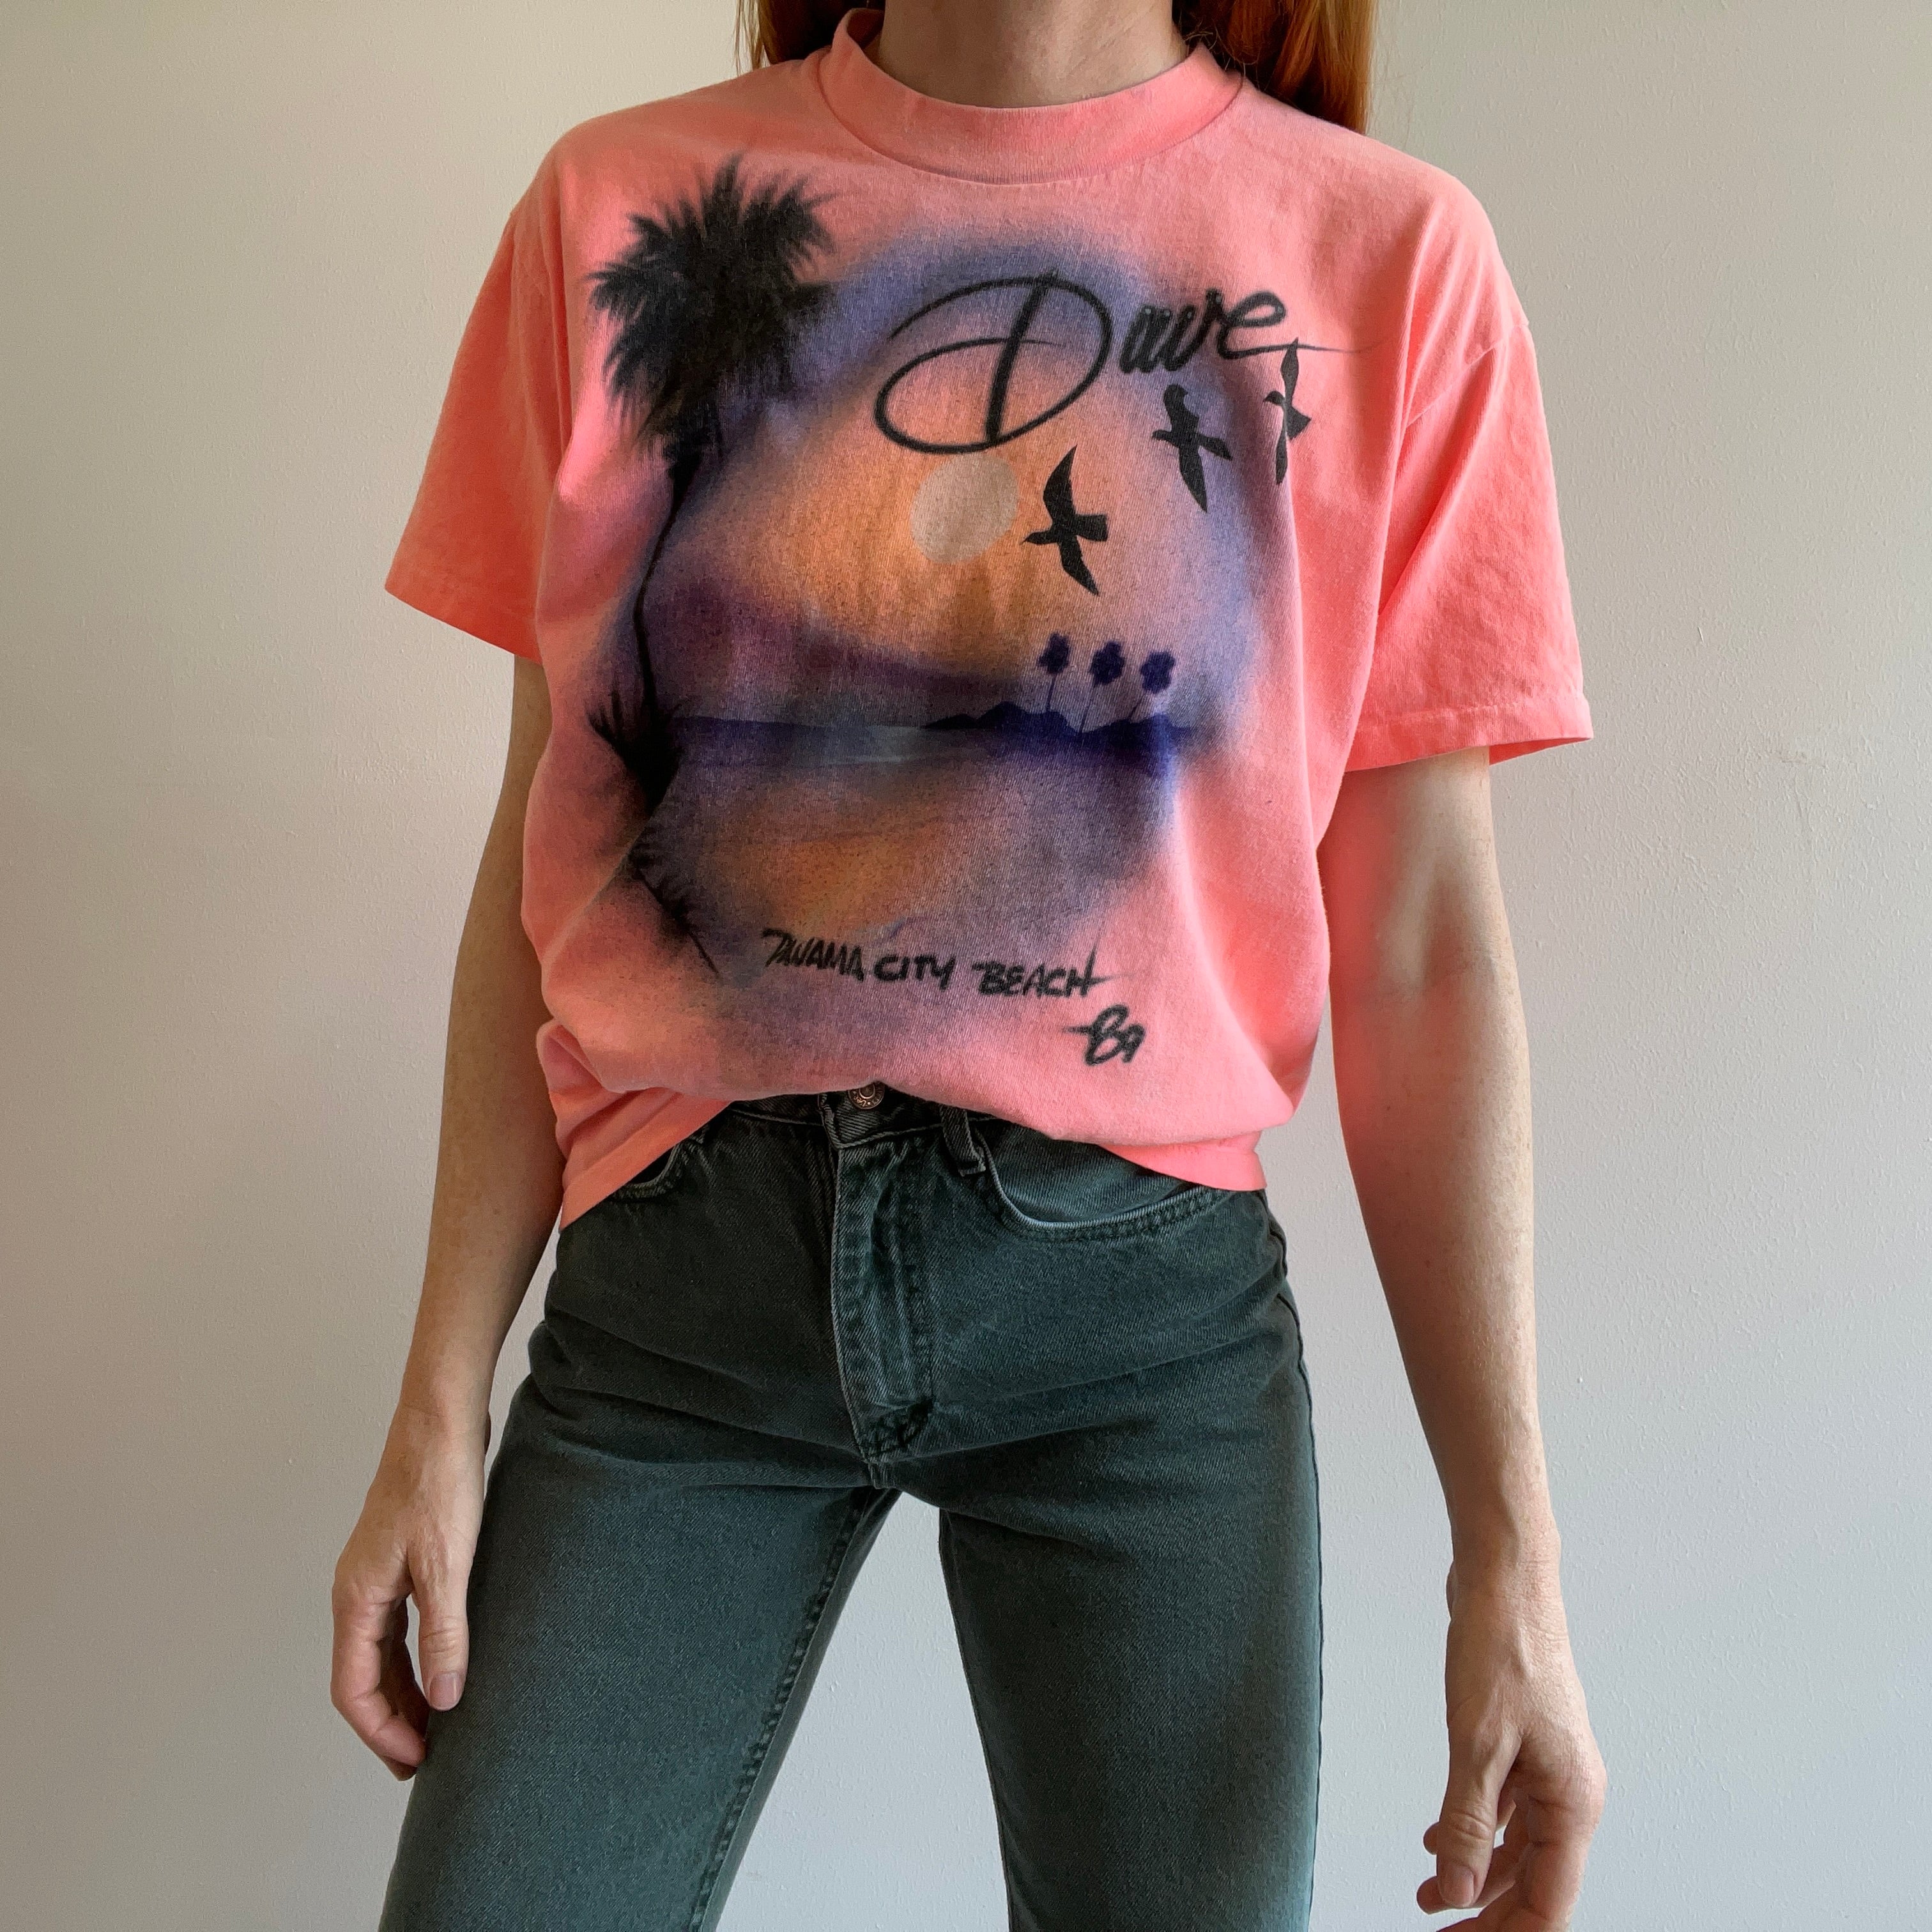 1989 Airbrushed Shirt for Dave by a Stedman Super Hi-Cru